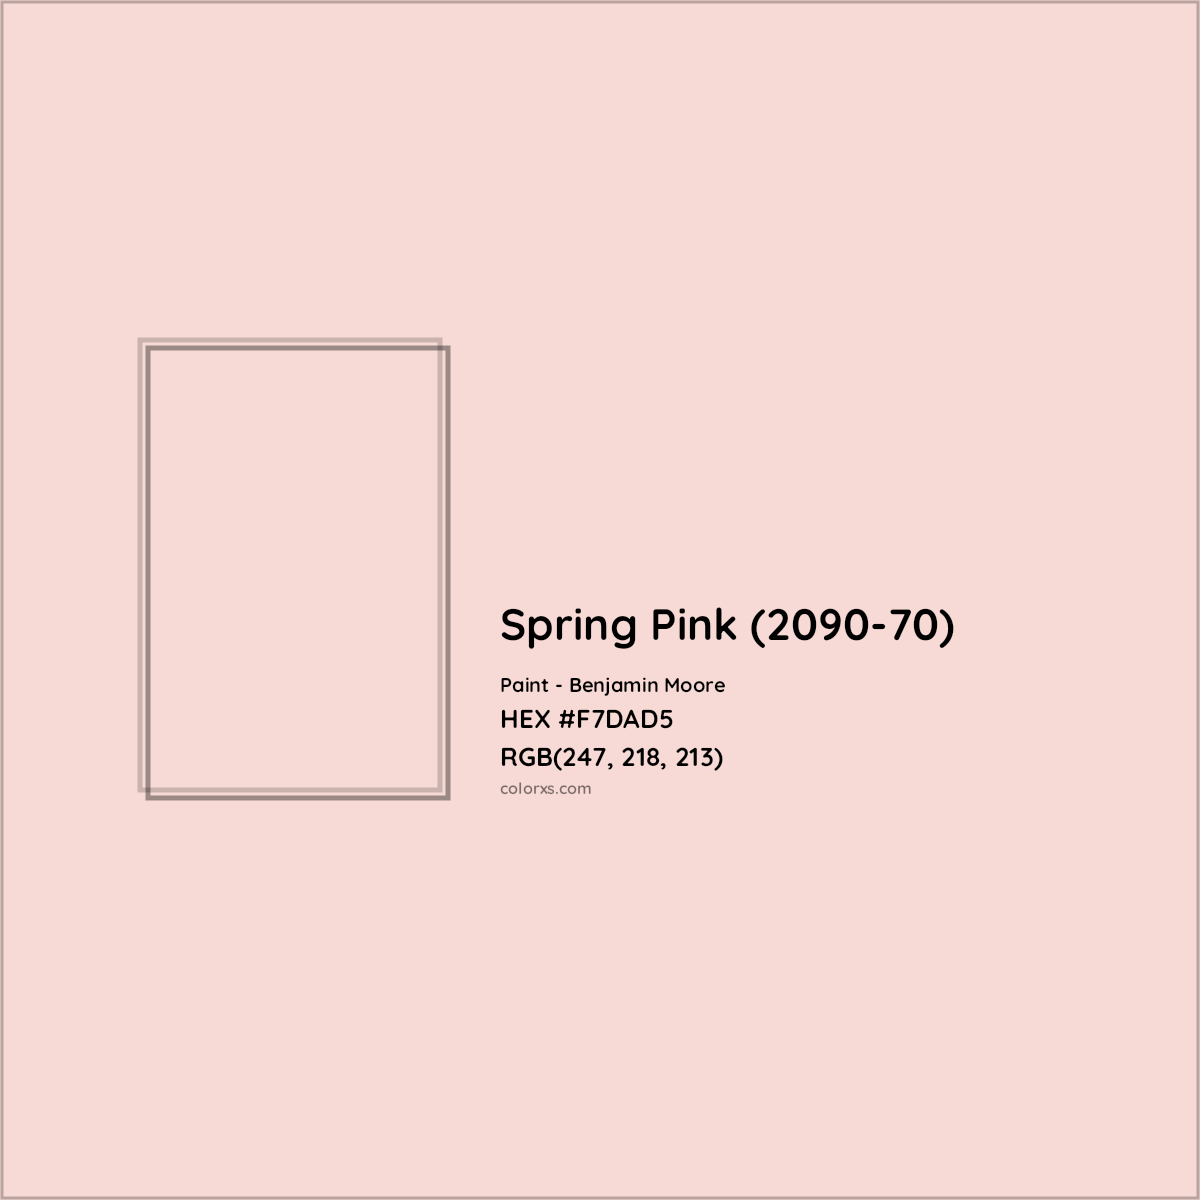 HEX #F7DAD5 Spring Pink (2090-70) Paint Benjamin Moore - Color Code